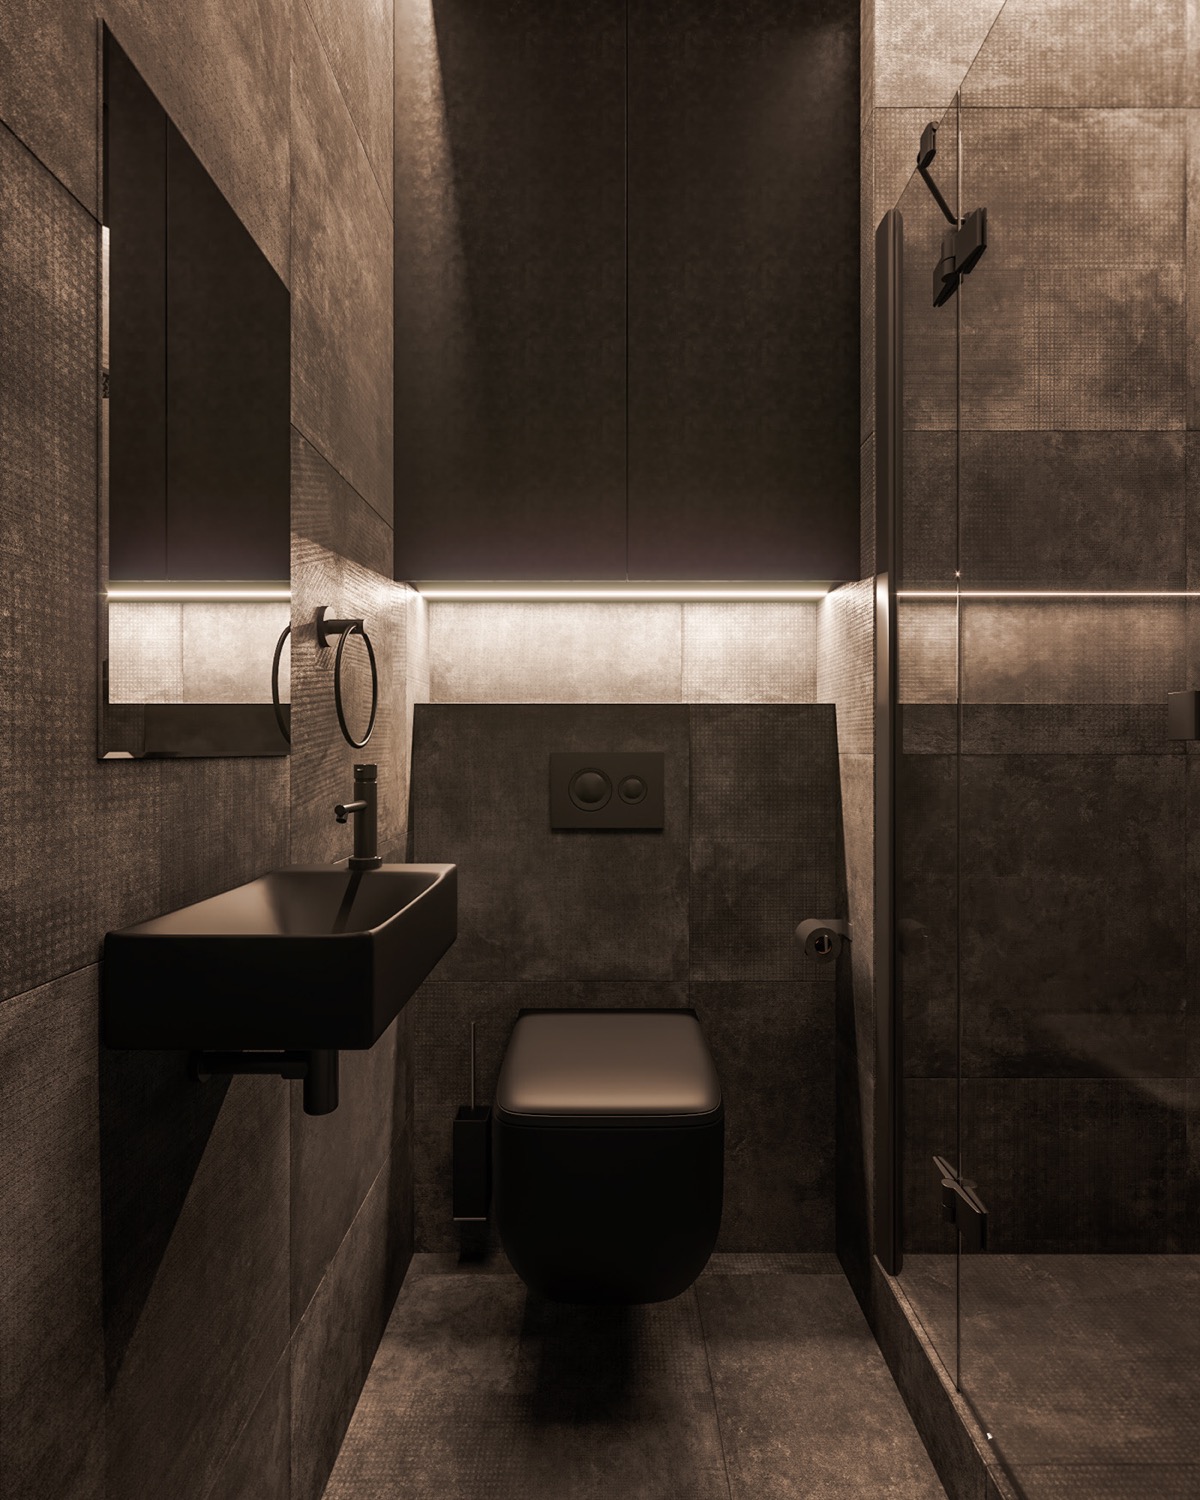 https://www.home-designing.com/wp-content/uploads/2020/09/black-toilet.jpg